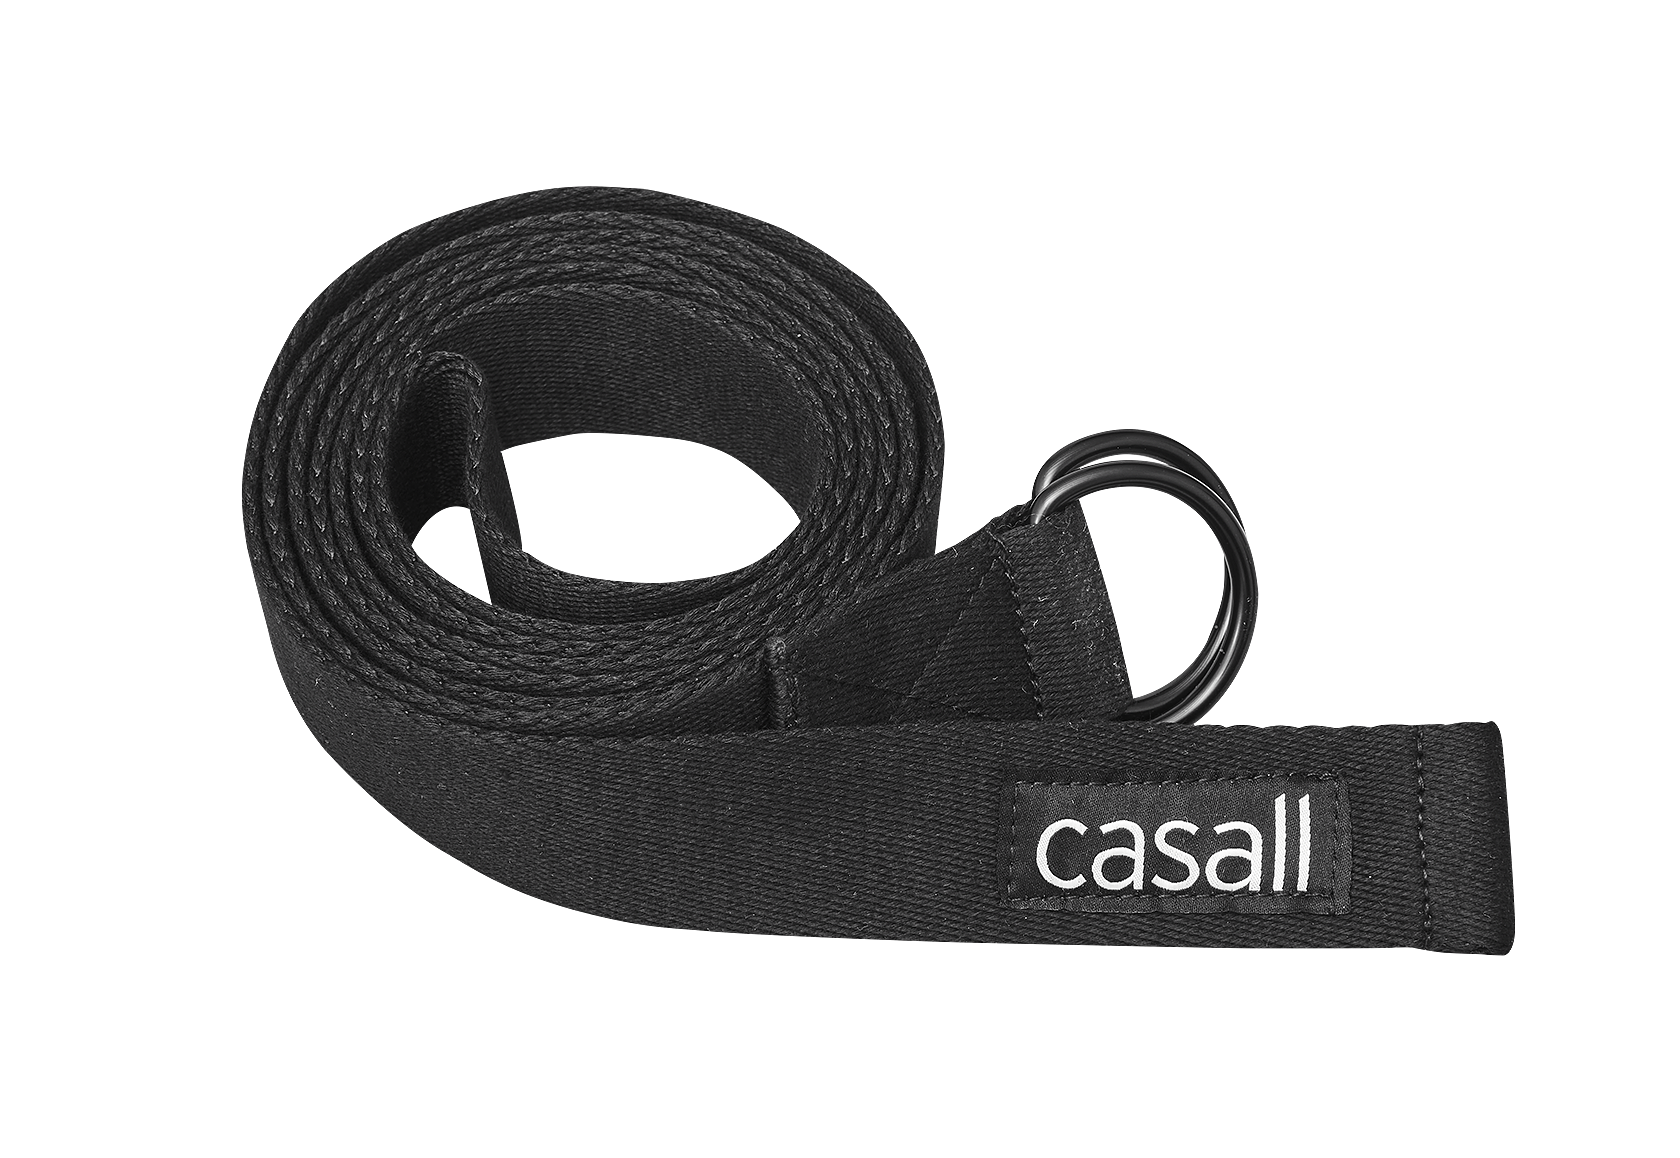 Casall Yoga strap - Black